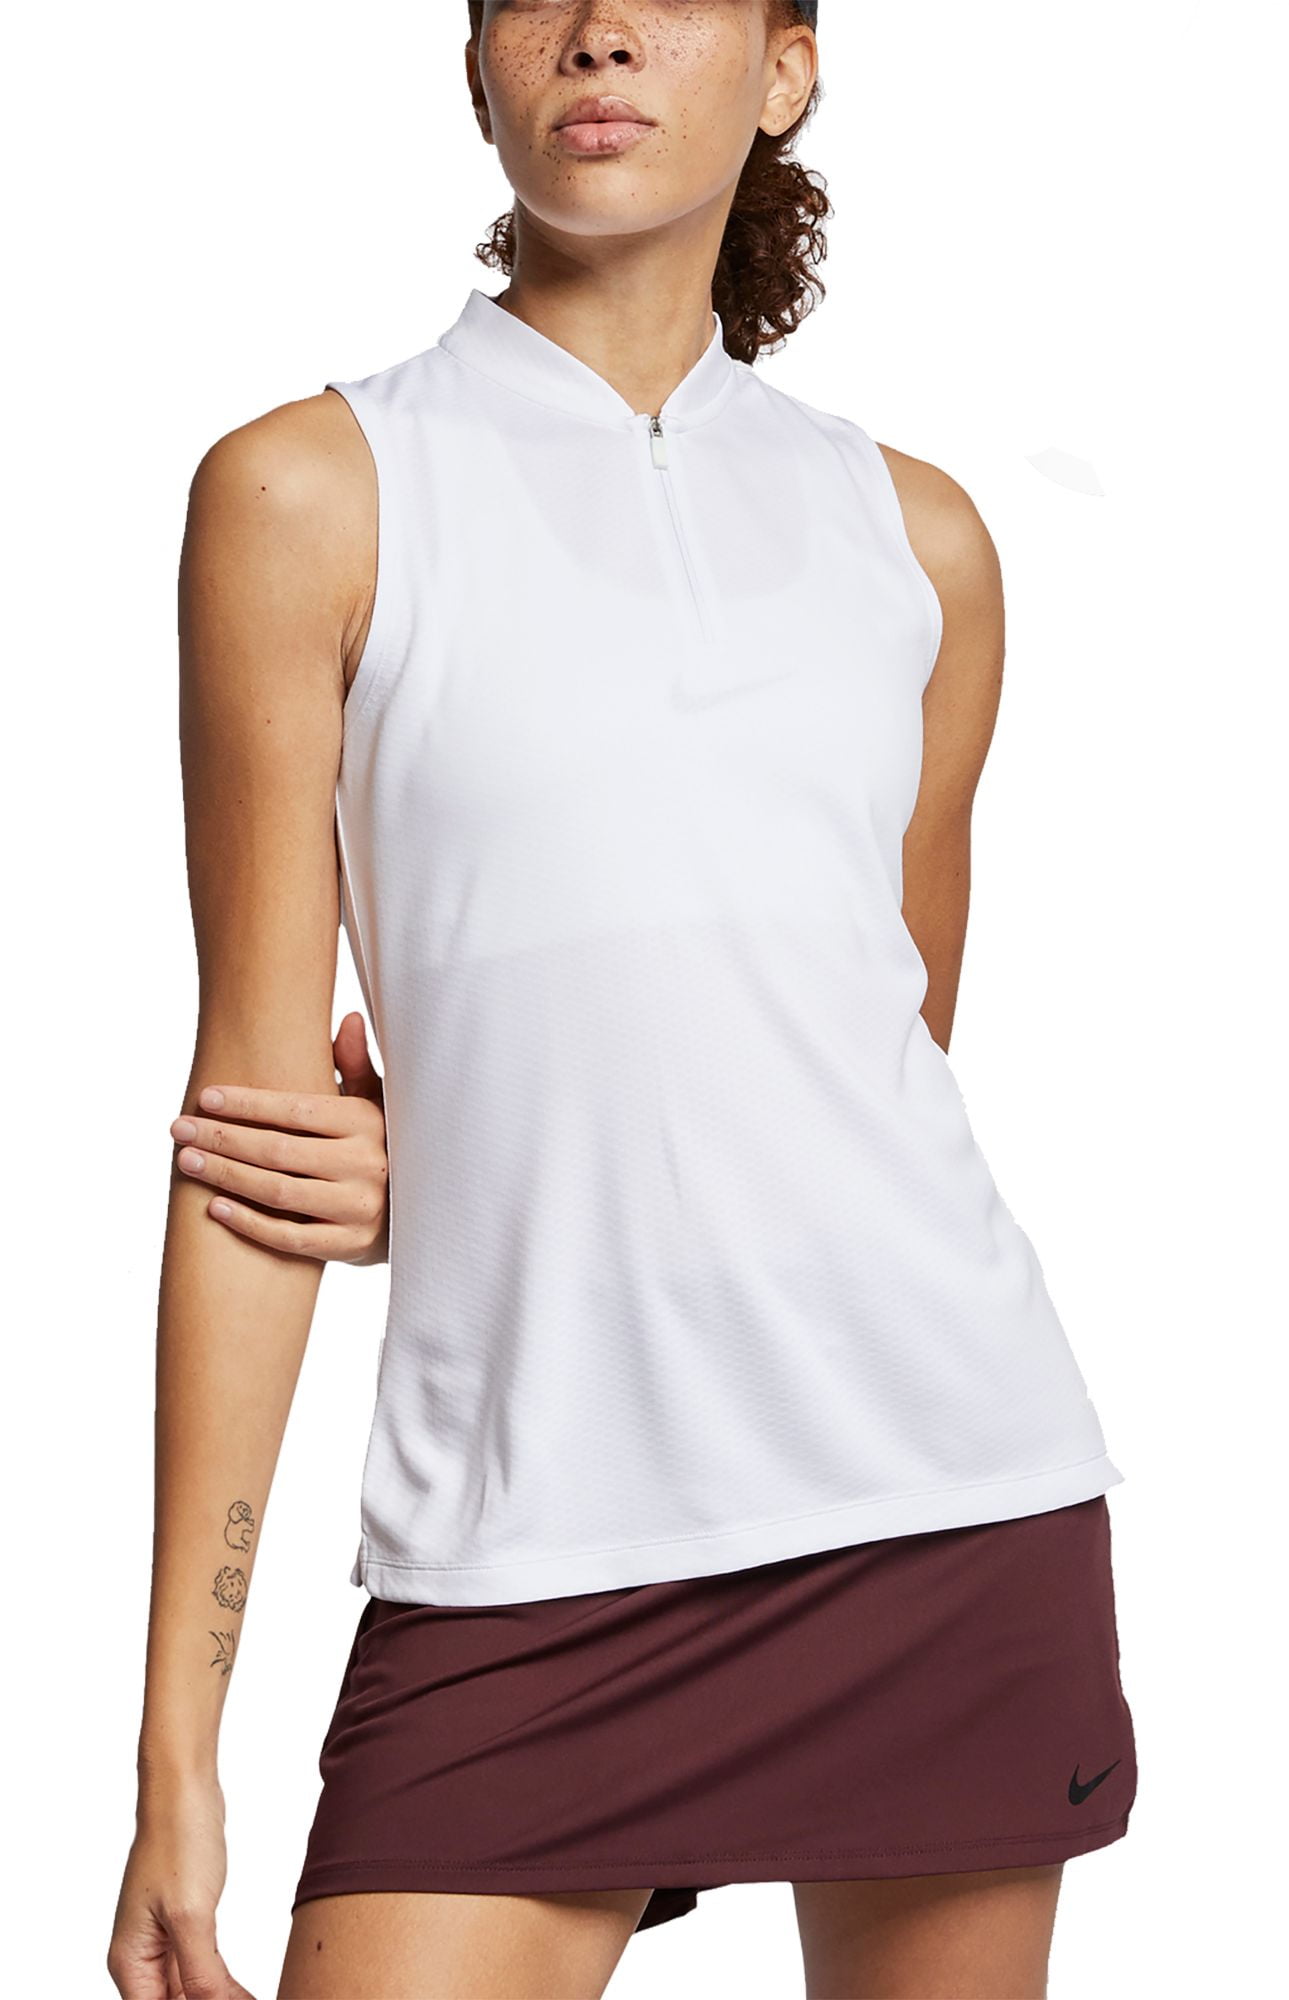 Nike - Nike Women's Dri-FIT Blade Sleeveless Golf Polo - Walmart.com ...